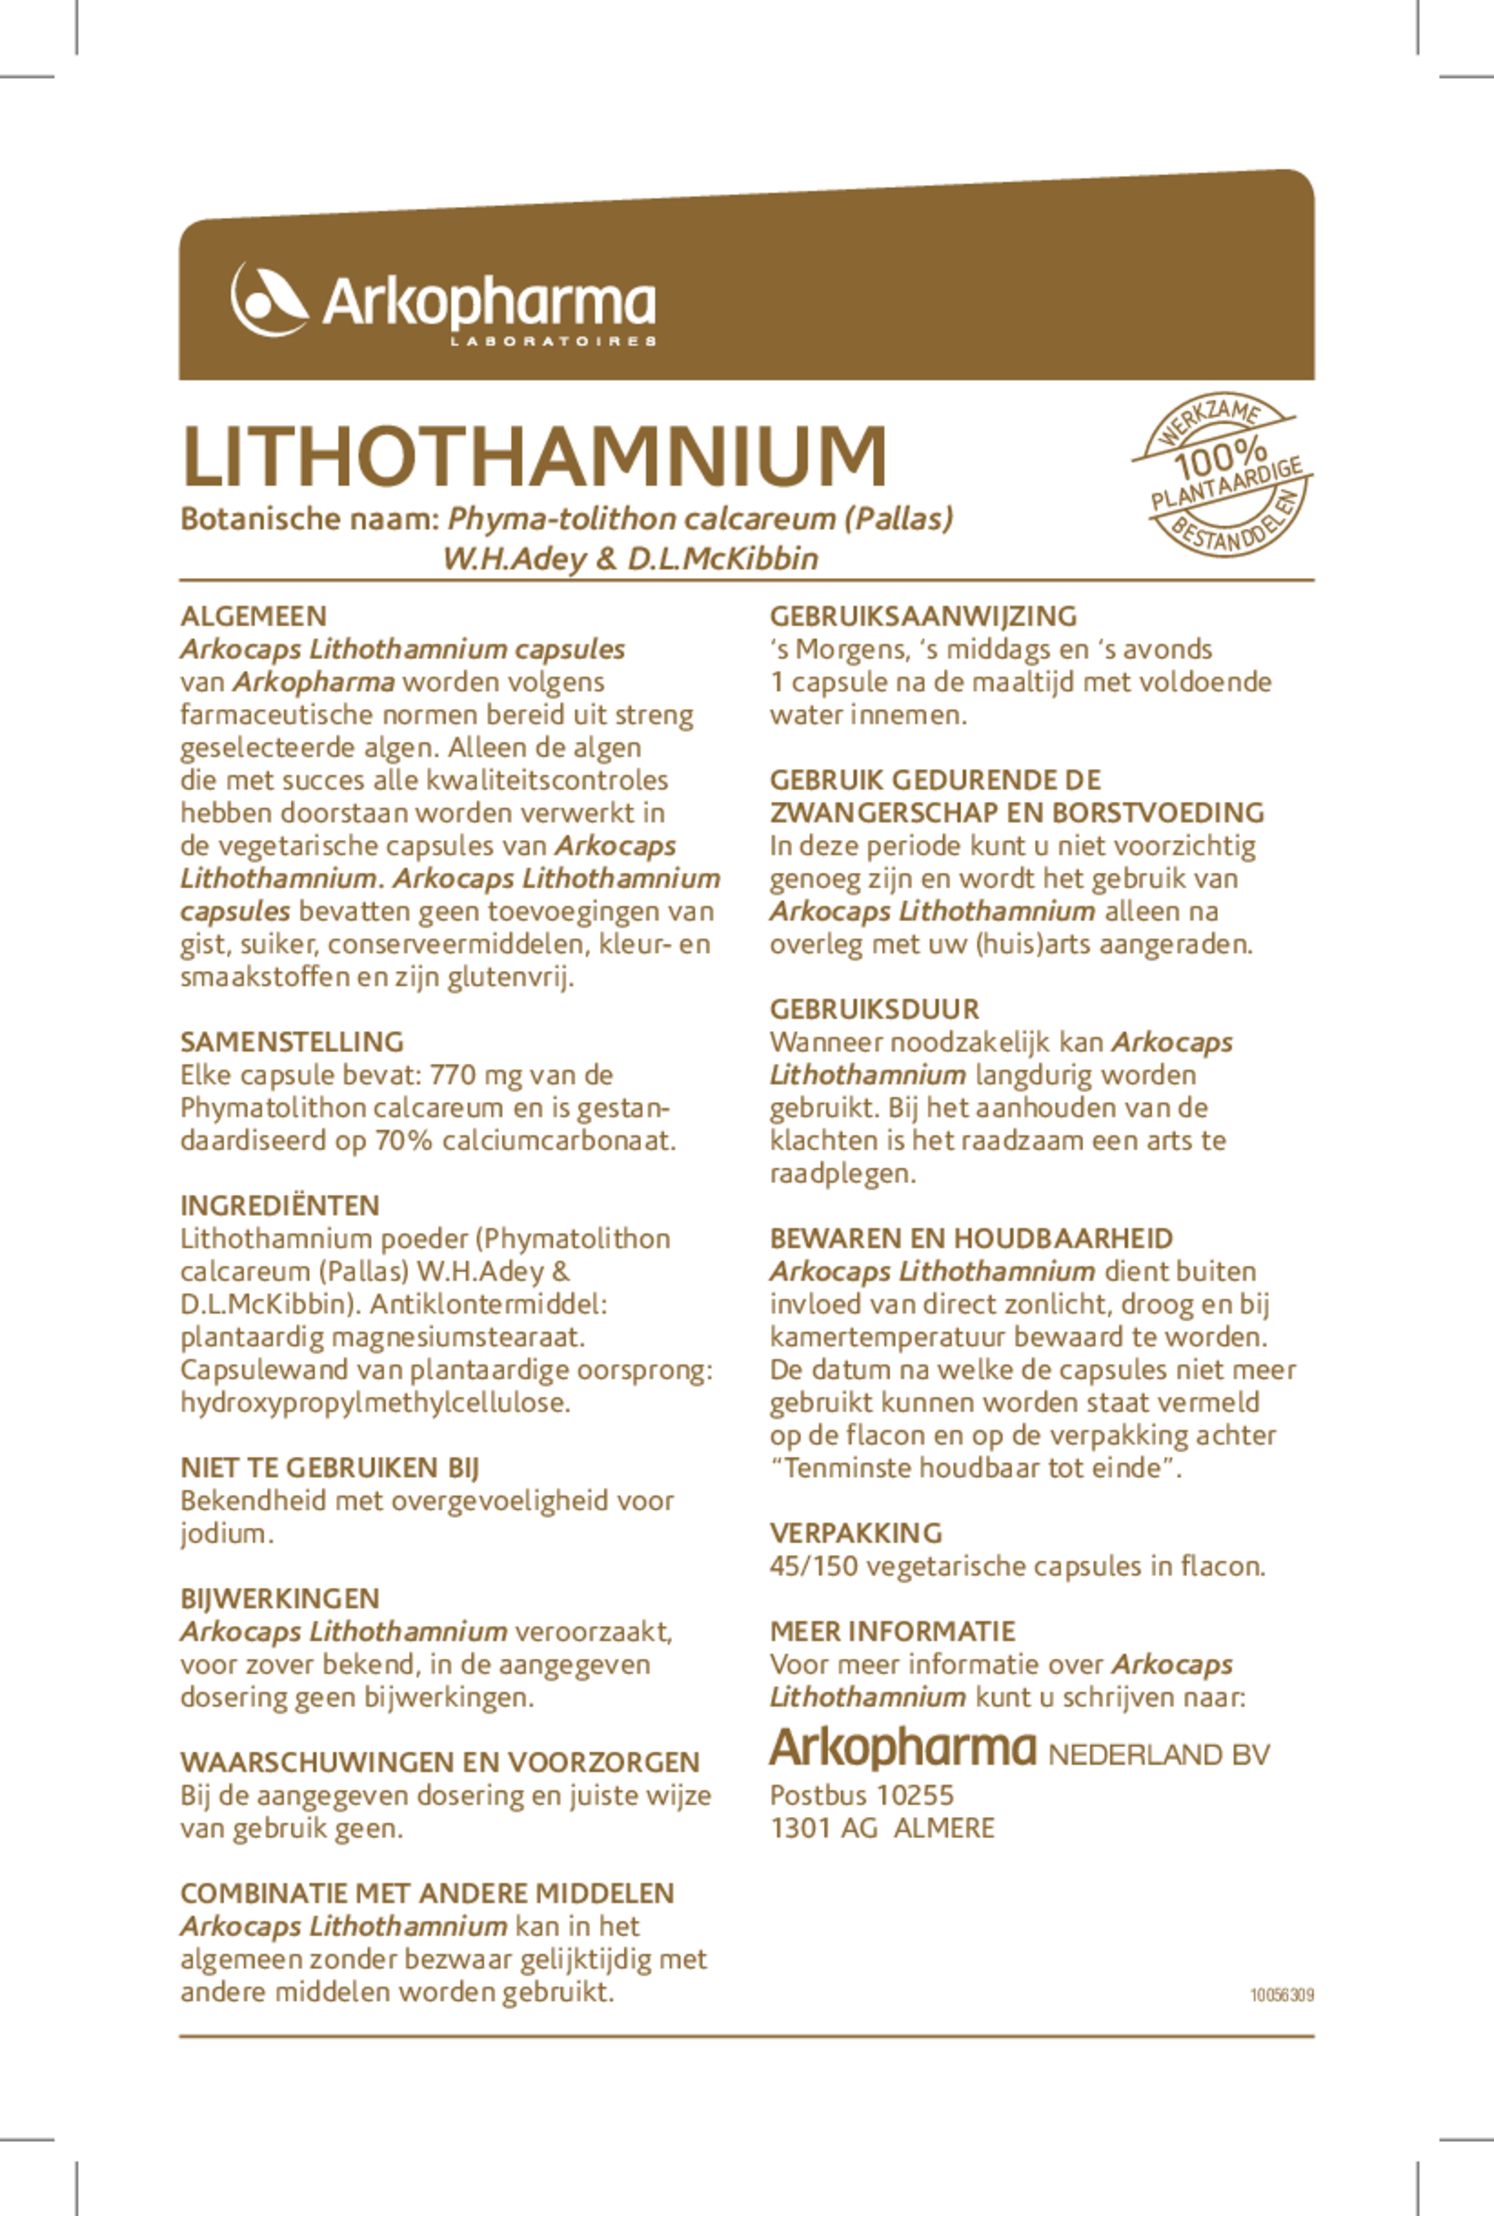 Lithothamnium Capsules afbeelding van document #1, gebruiksaanwijzing